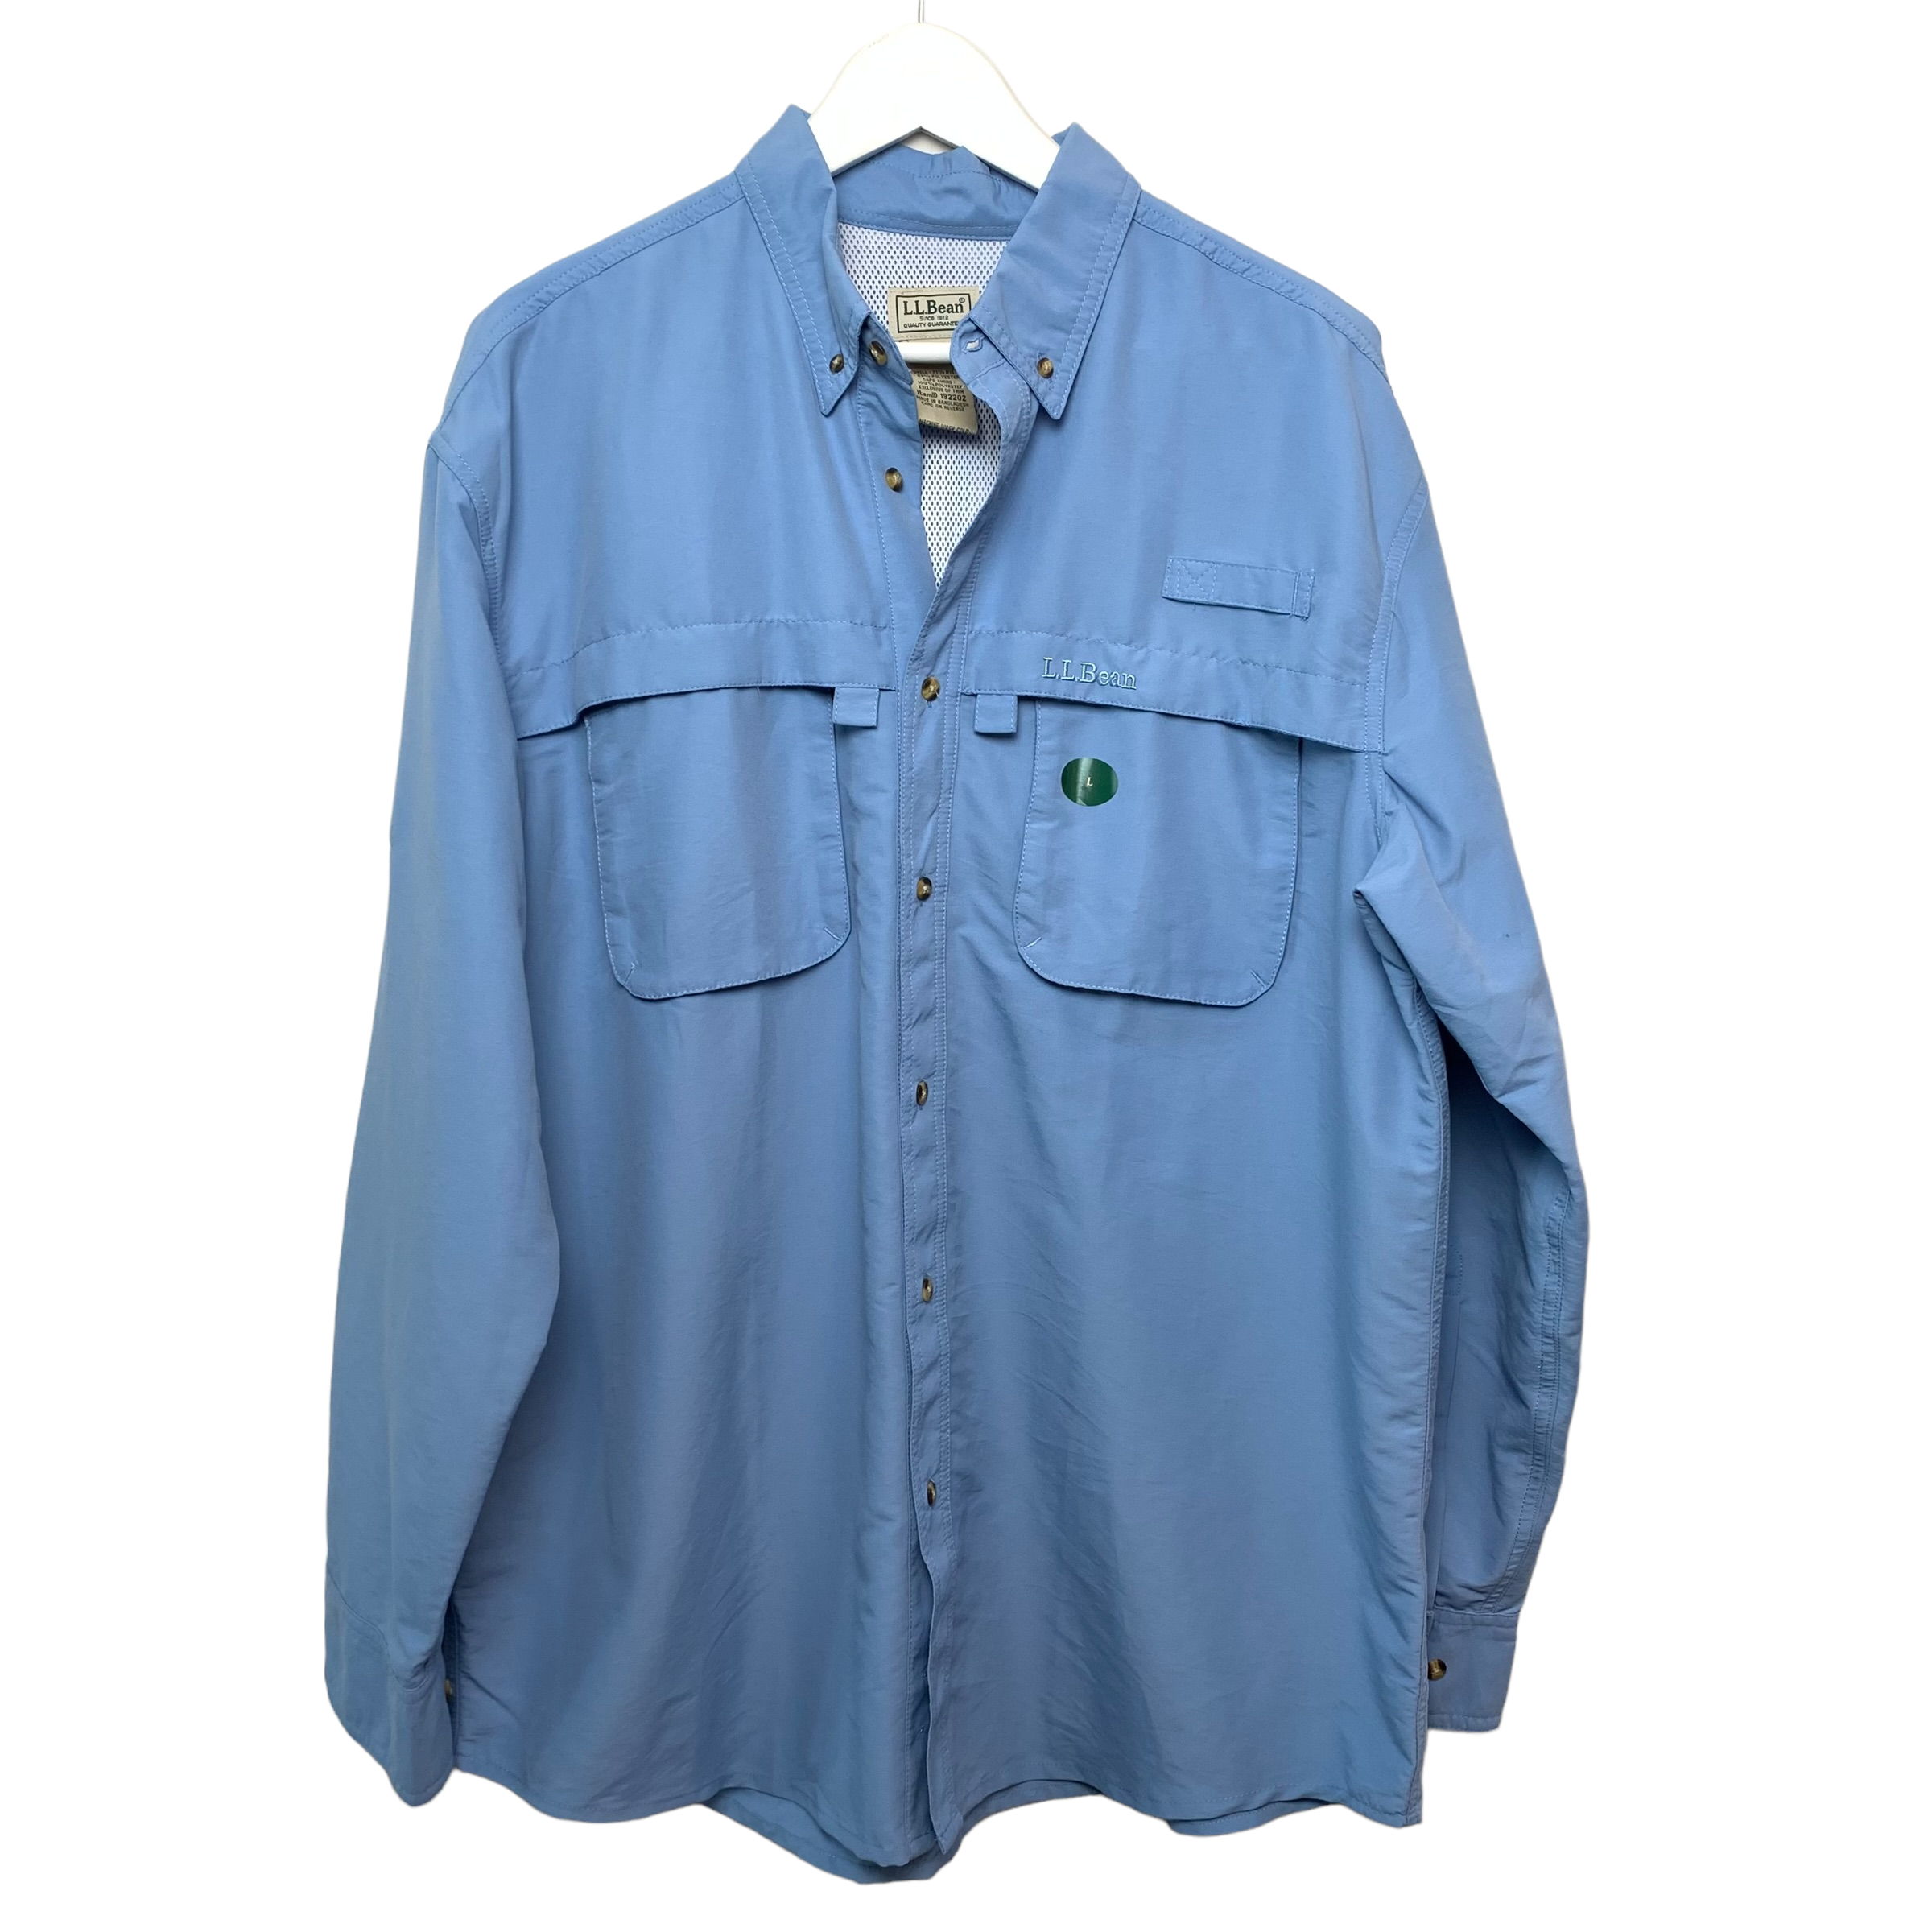 L.L. Bean Tropicwear Style Shirt Light Blue Large Outdoorsman